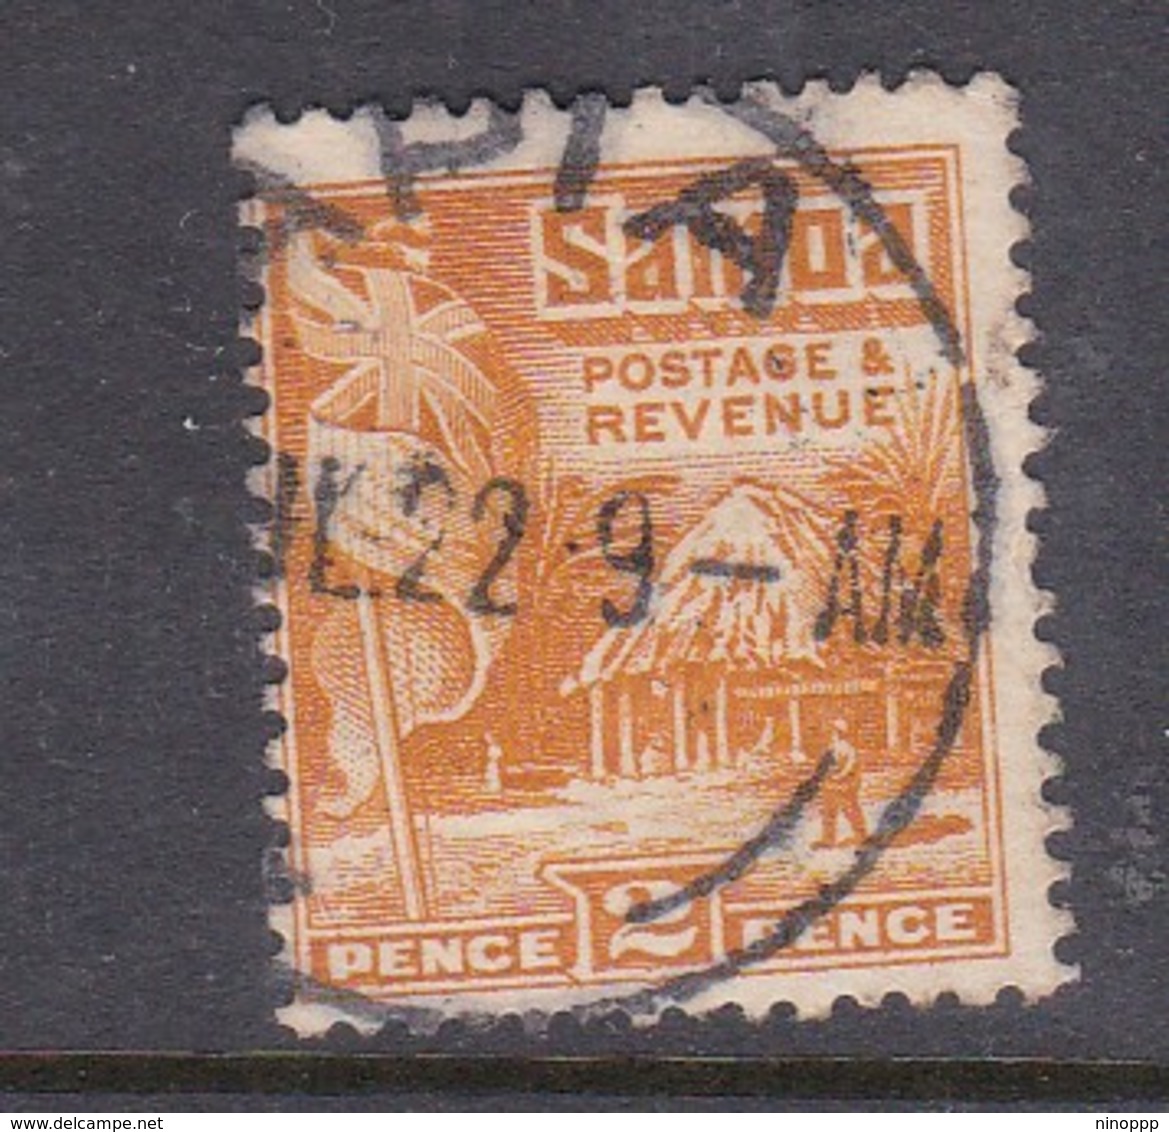 Samoa SG 156 1921 Native Hut 2 Pence Yellow Perf 14x13.5 Used - Samoa